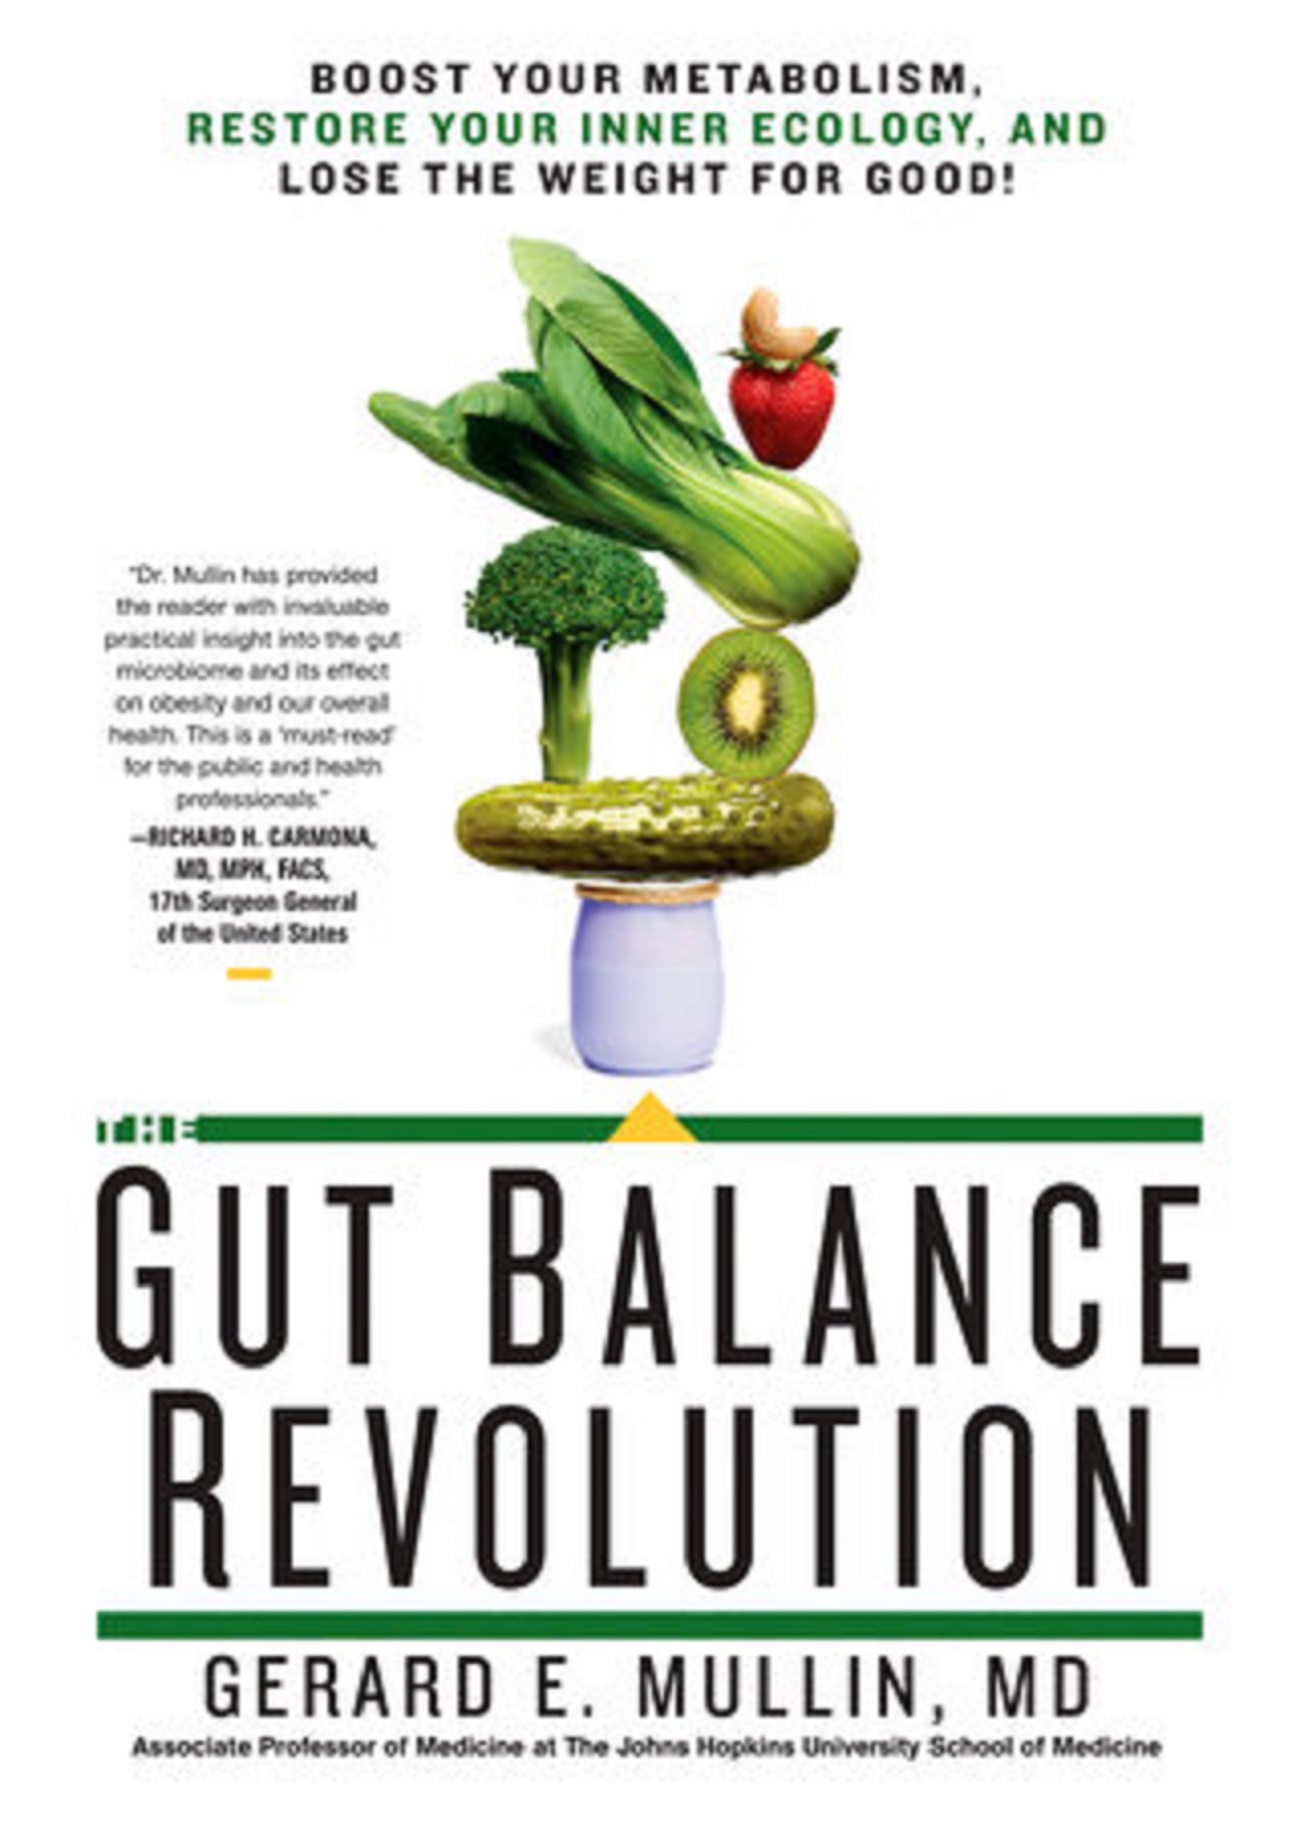 The Gut Valance Revolution